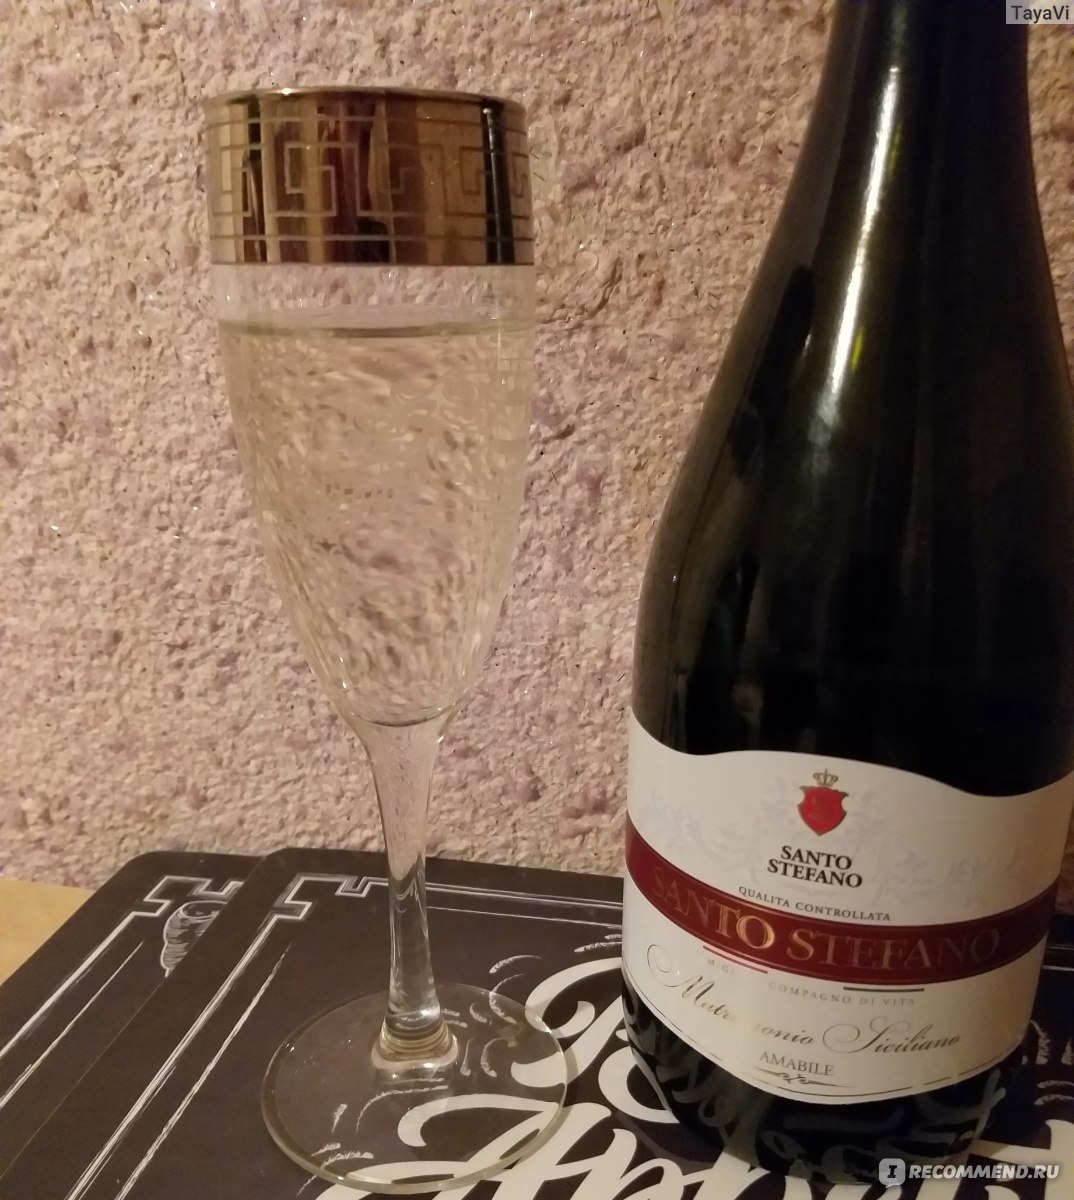 Санто Стефано винный напиток Матримонио Сицилиано